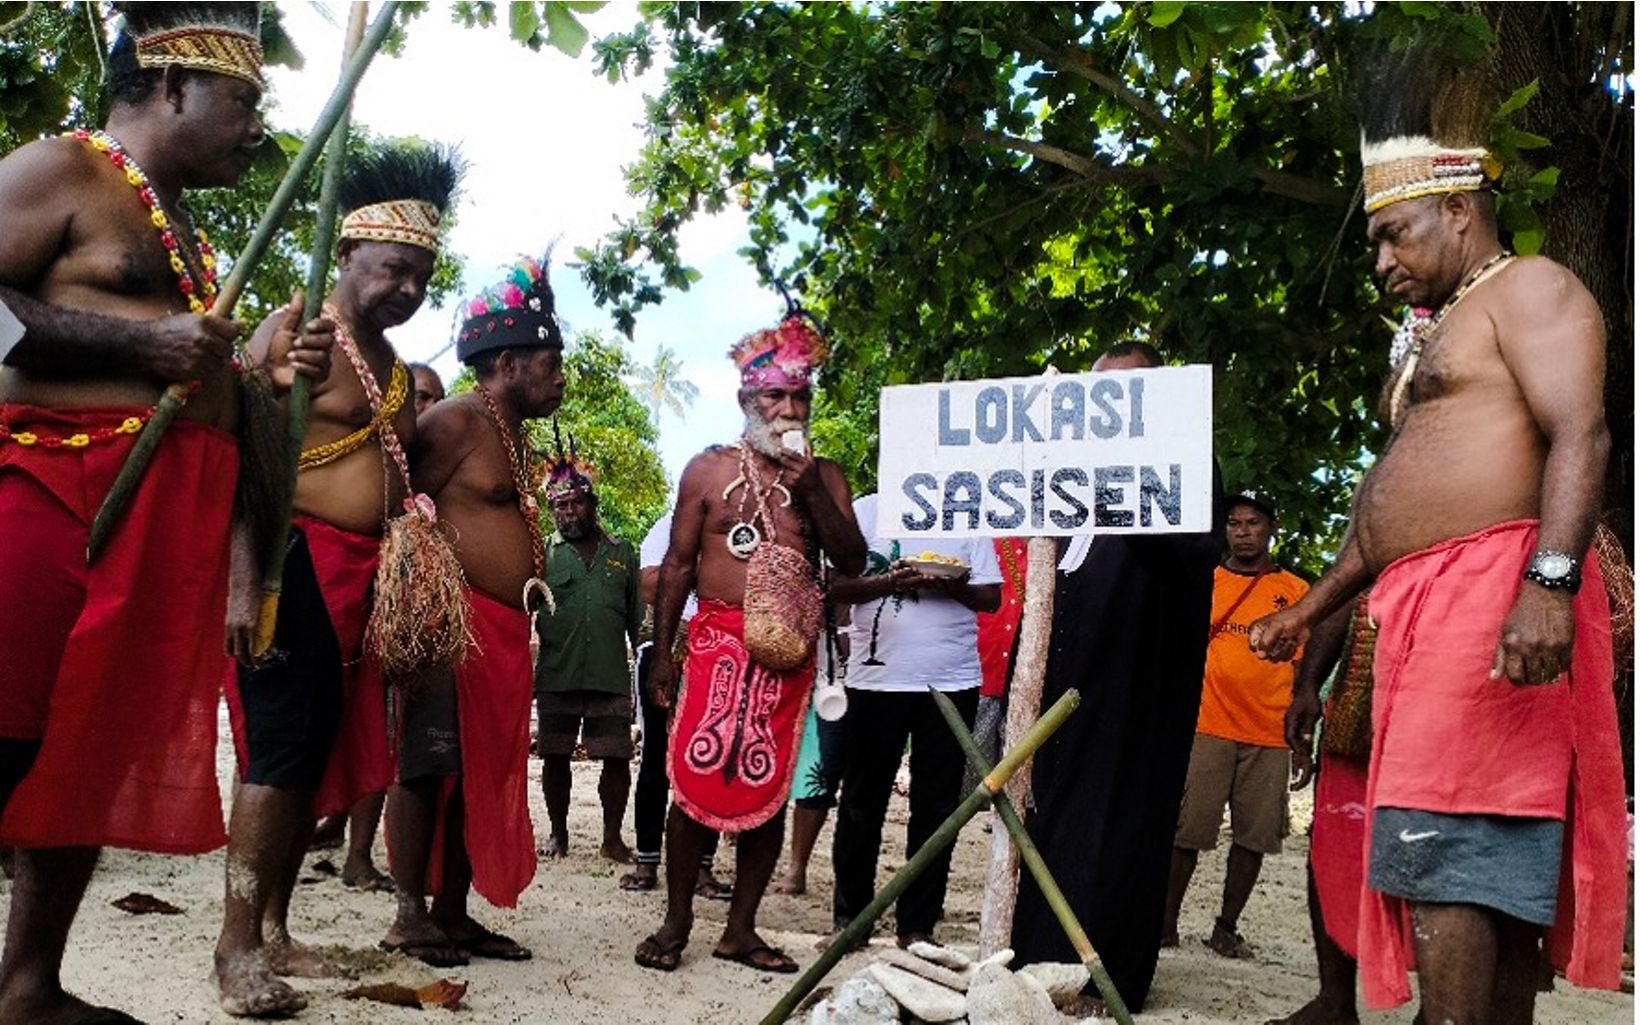 Keterangan Foto Pengukuhan komitmen masyarakat adat Byak Karon dalam menjaga kelestarian laut melalui upacara tutup sasisen (sasi). © Nugroho Arif Prabowo/YKAN